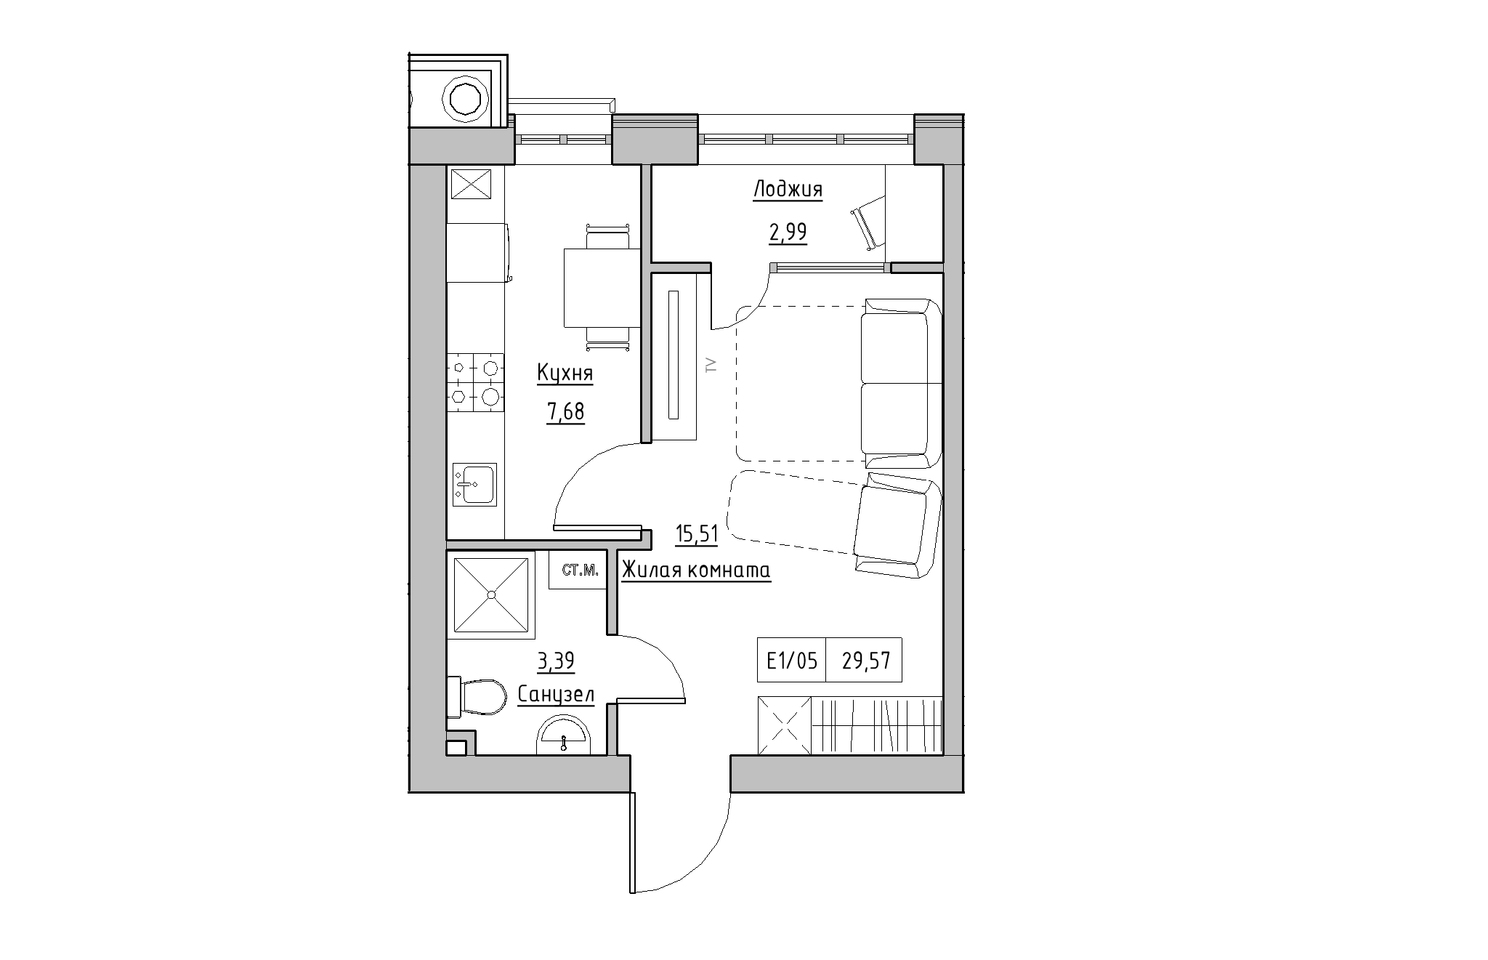 Planning 1-rm flats area 29.57m2, KS-010-02/0006.